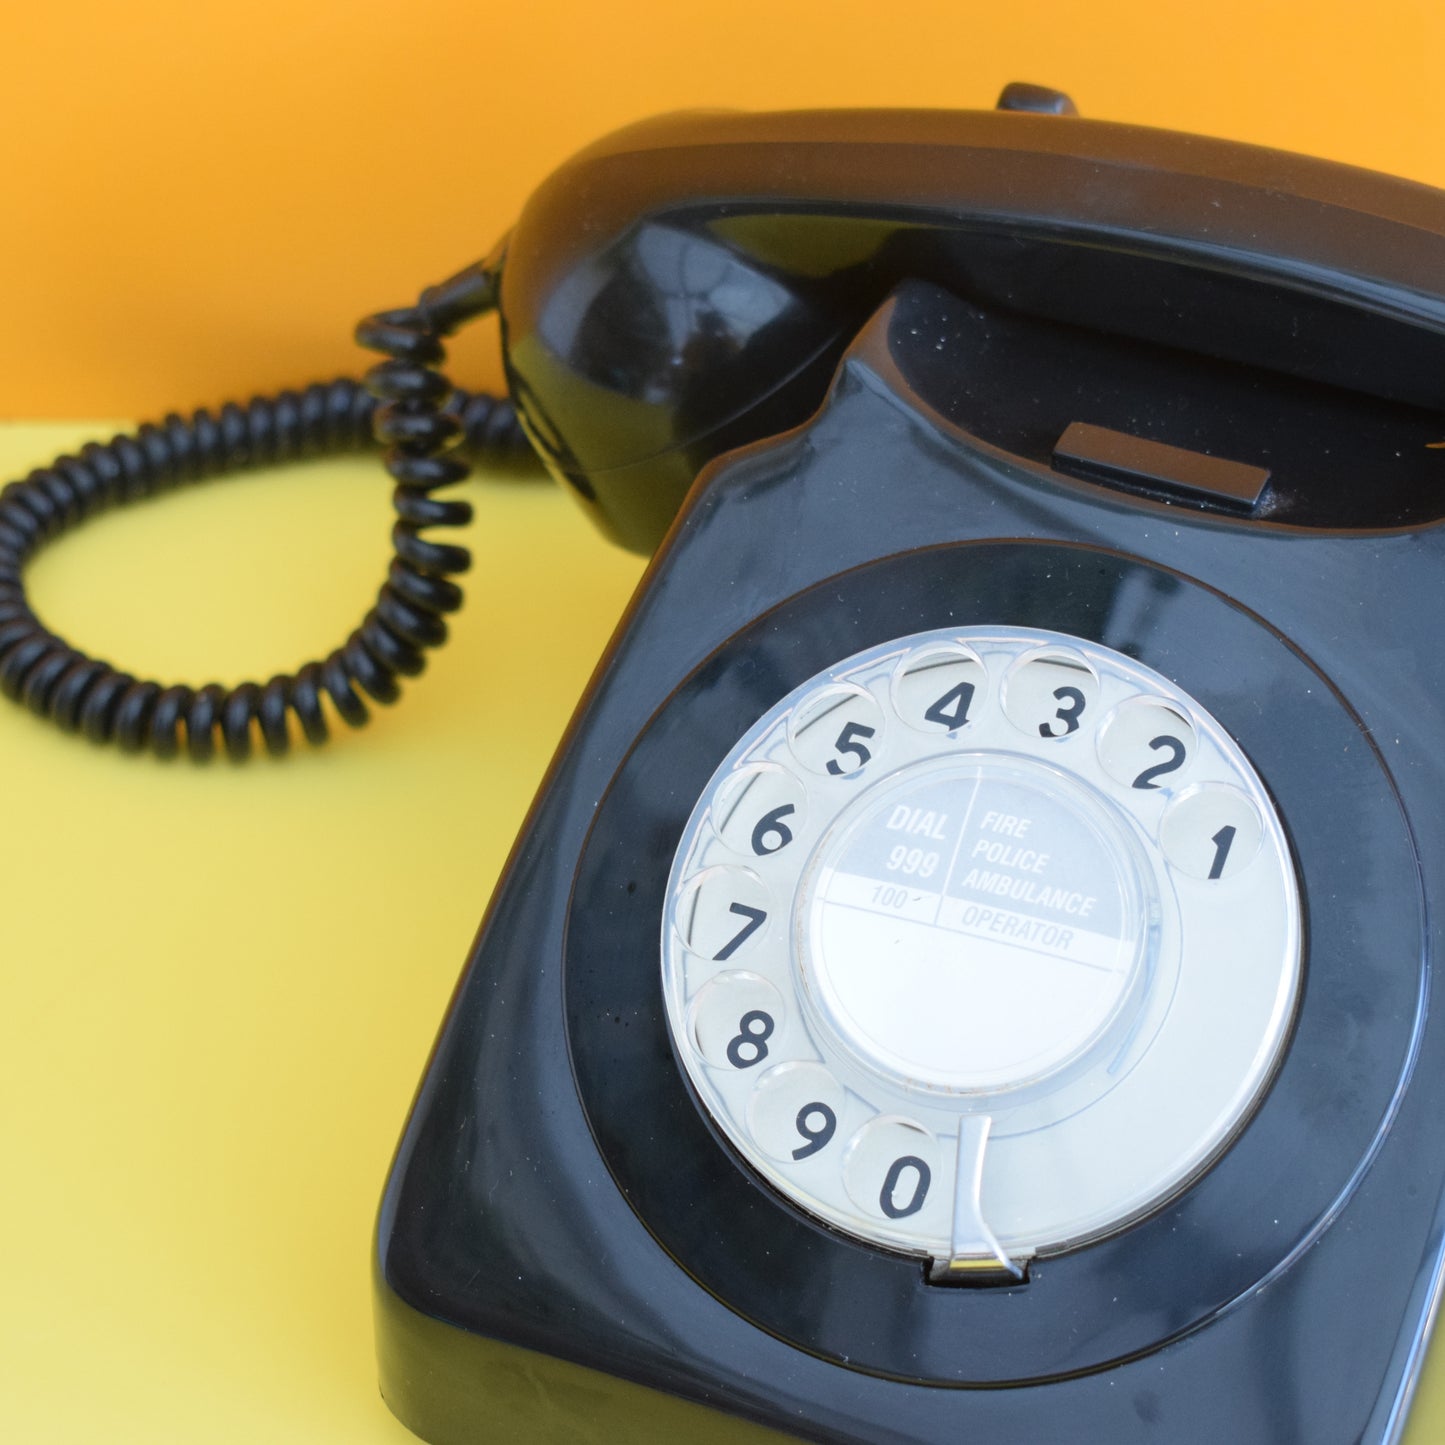 Vintage 1970s GPO Phone - Fully Working - Black